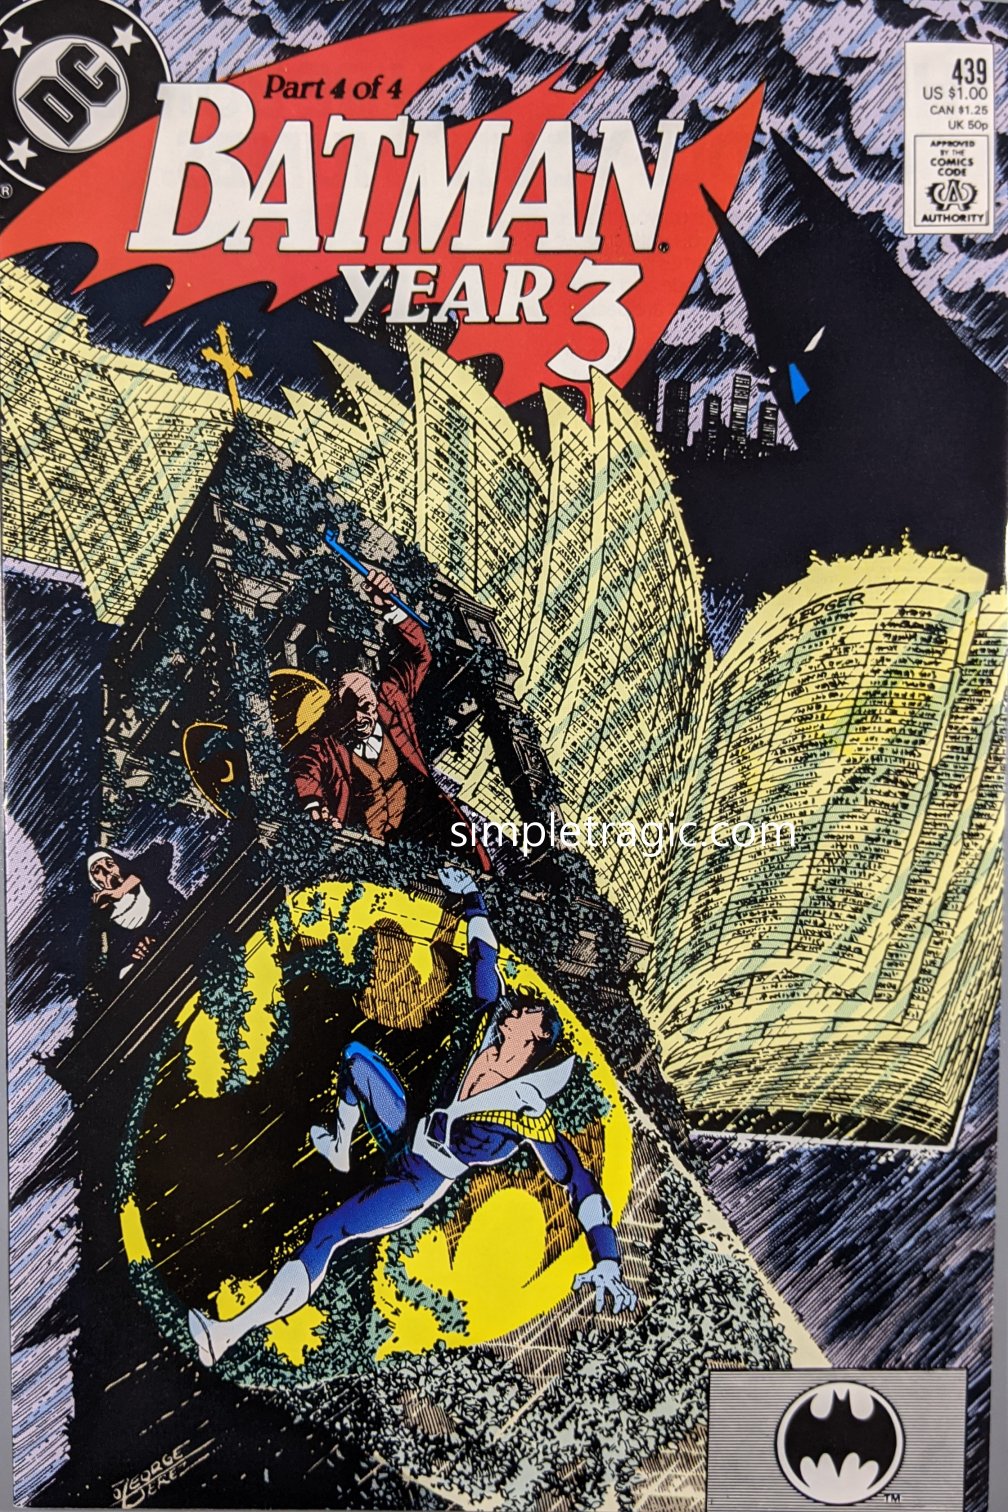 Batman #439 Comic Book Cover Art by George Perez